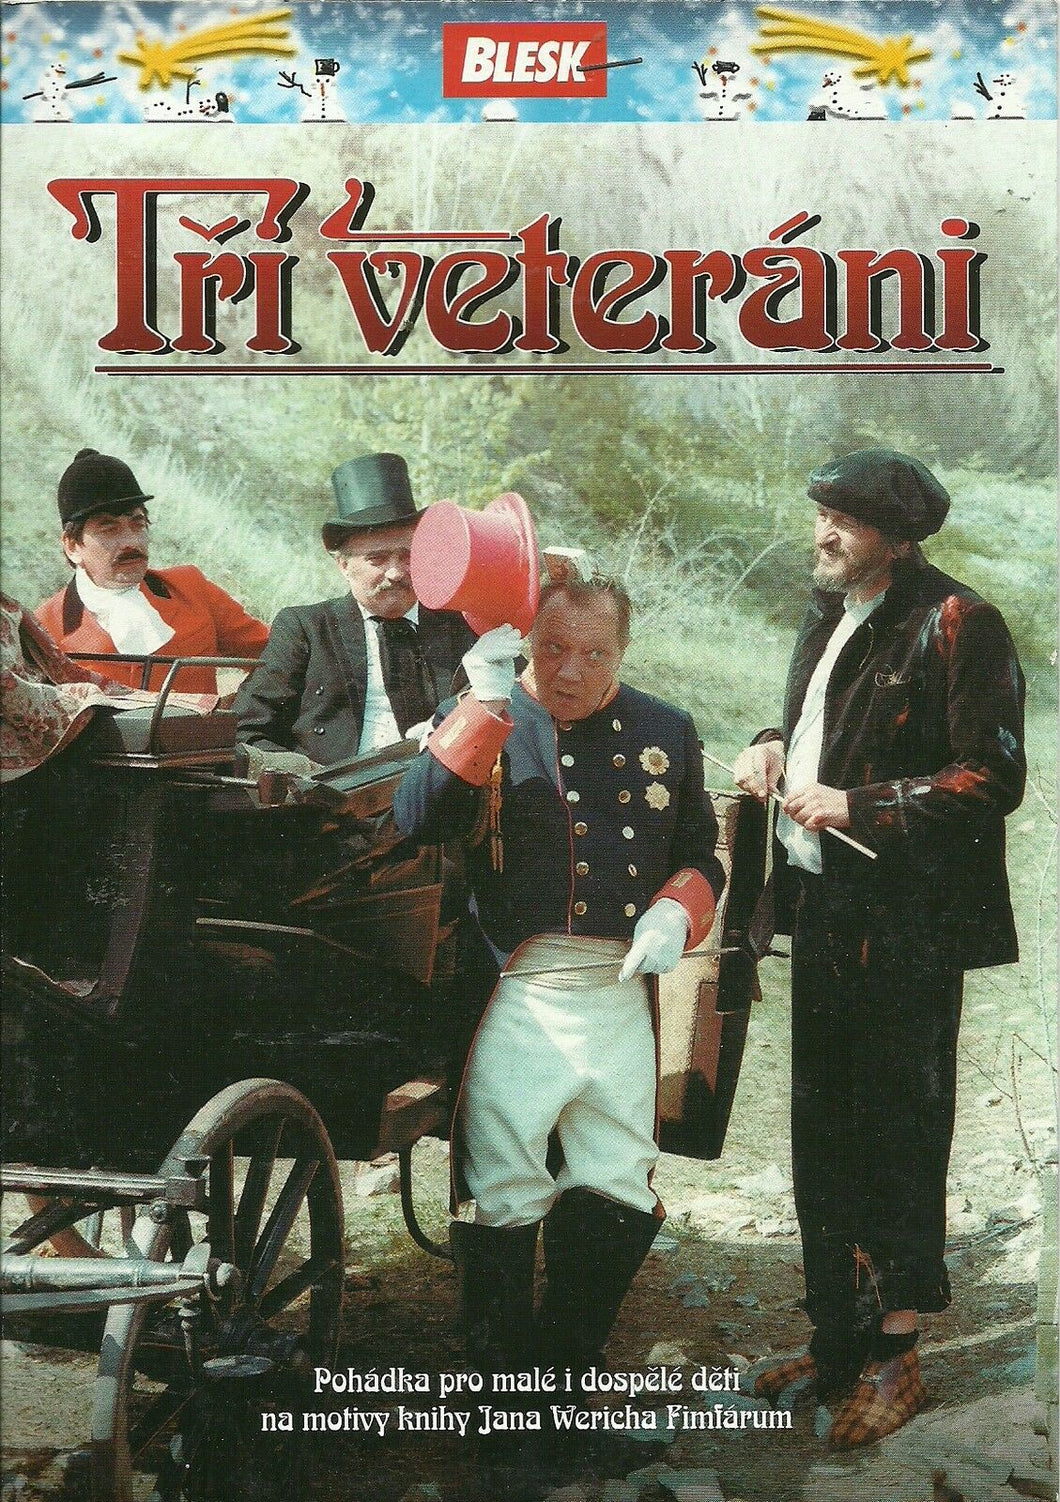 THREE VETERANS (Tri veterani) DVD with subtitles